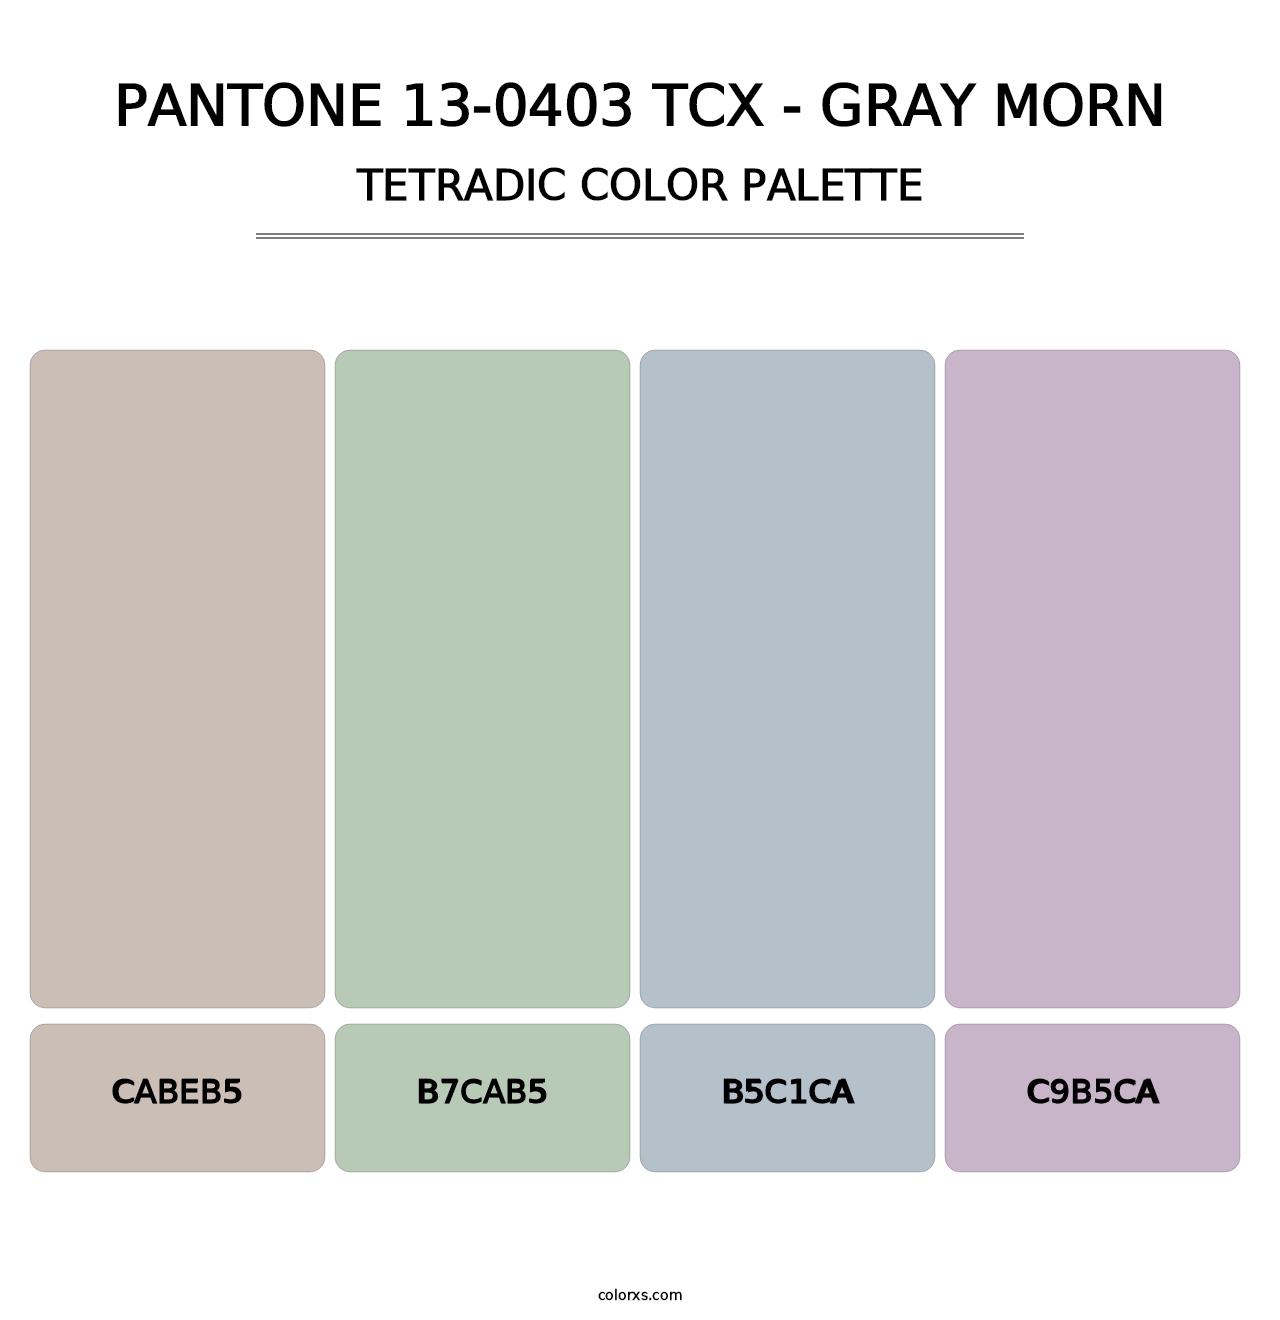 PANTONE 13-0403 TCX - Gray Morn - Tetradic Color Palette